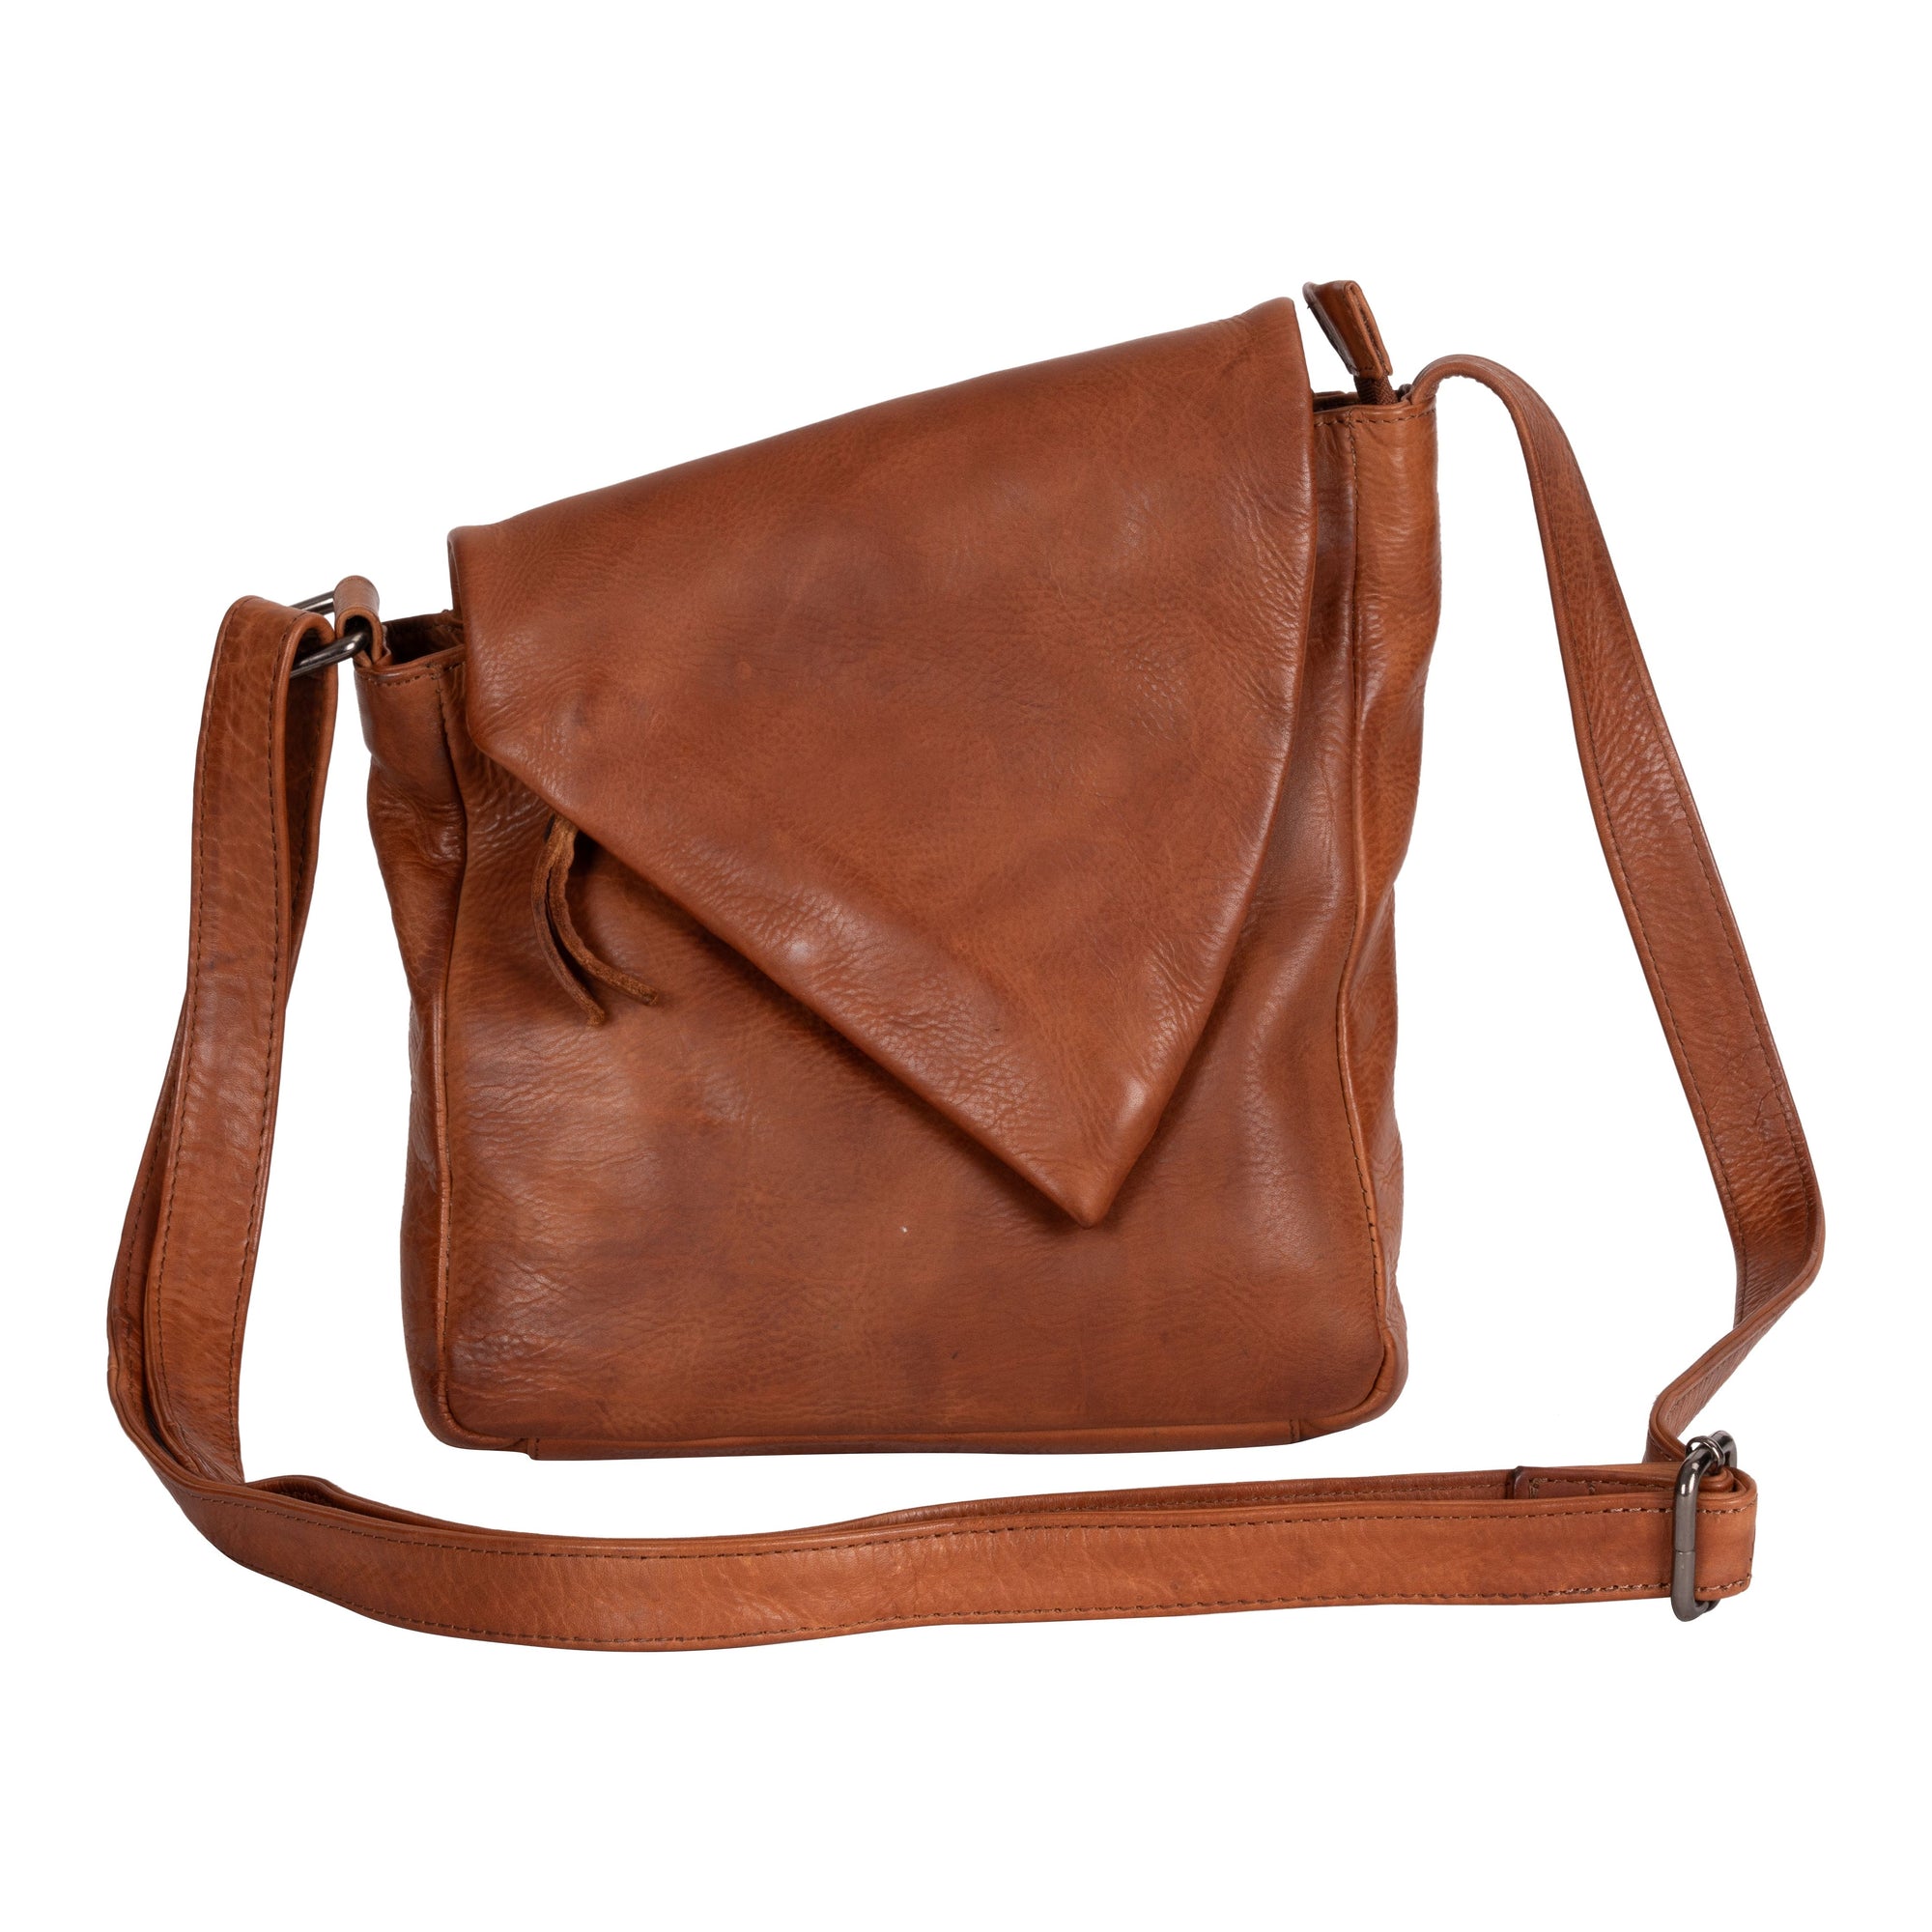 Leather Small Cross Body/sling bag Coruna - Cognac - Leather Greenwood Bag | The Greenwood Leather Online Shop Australia